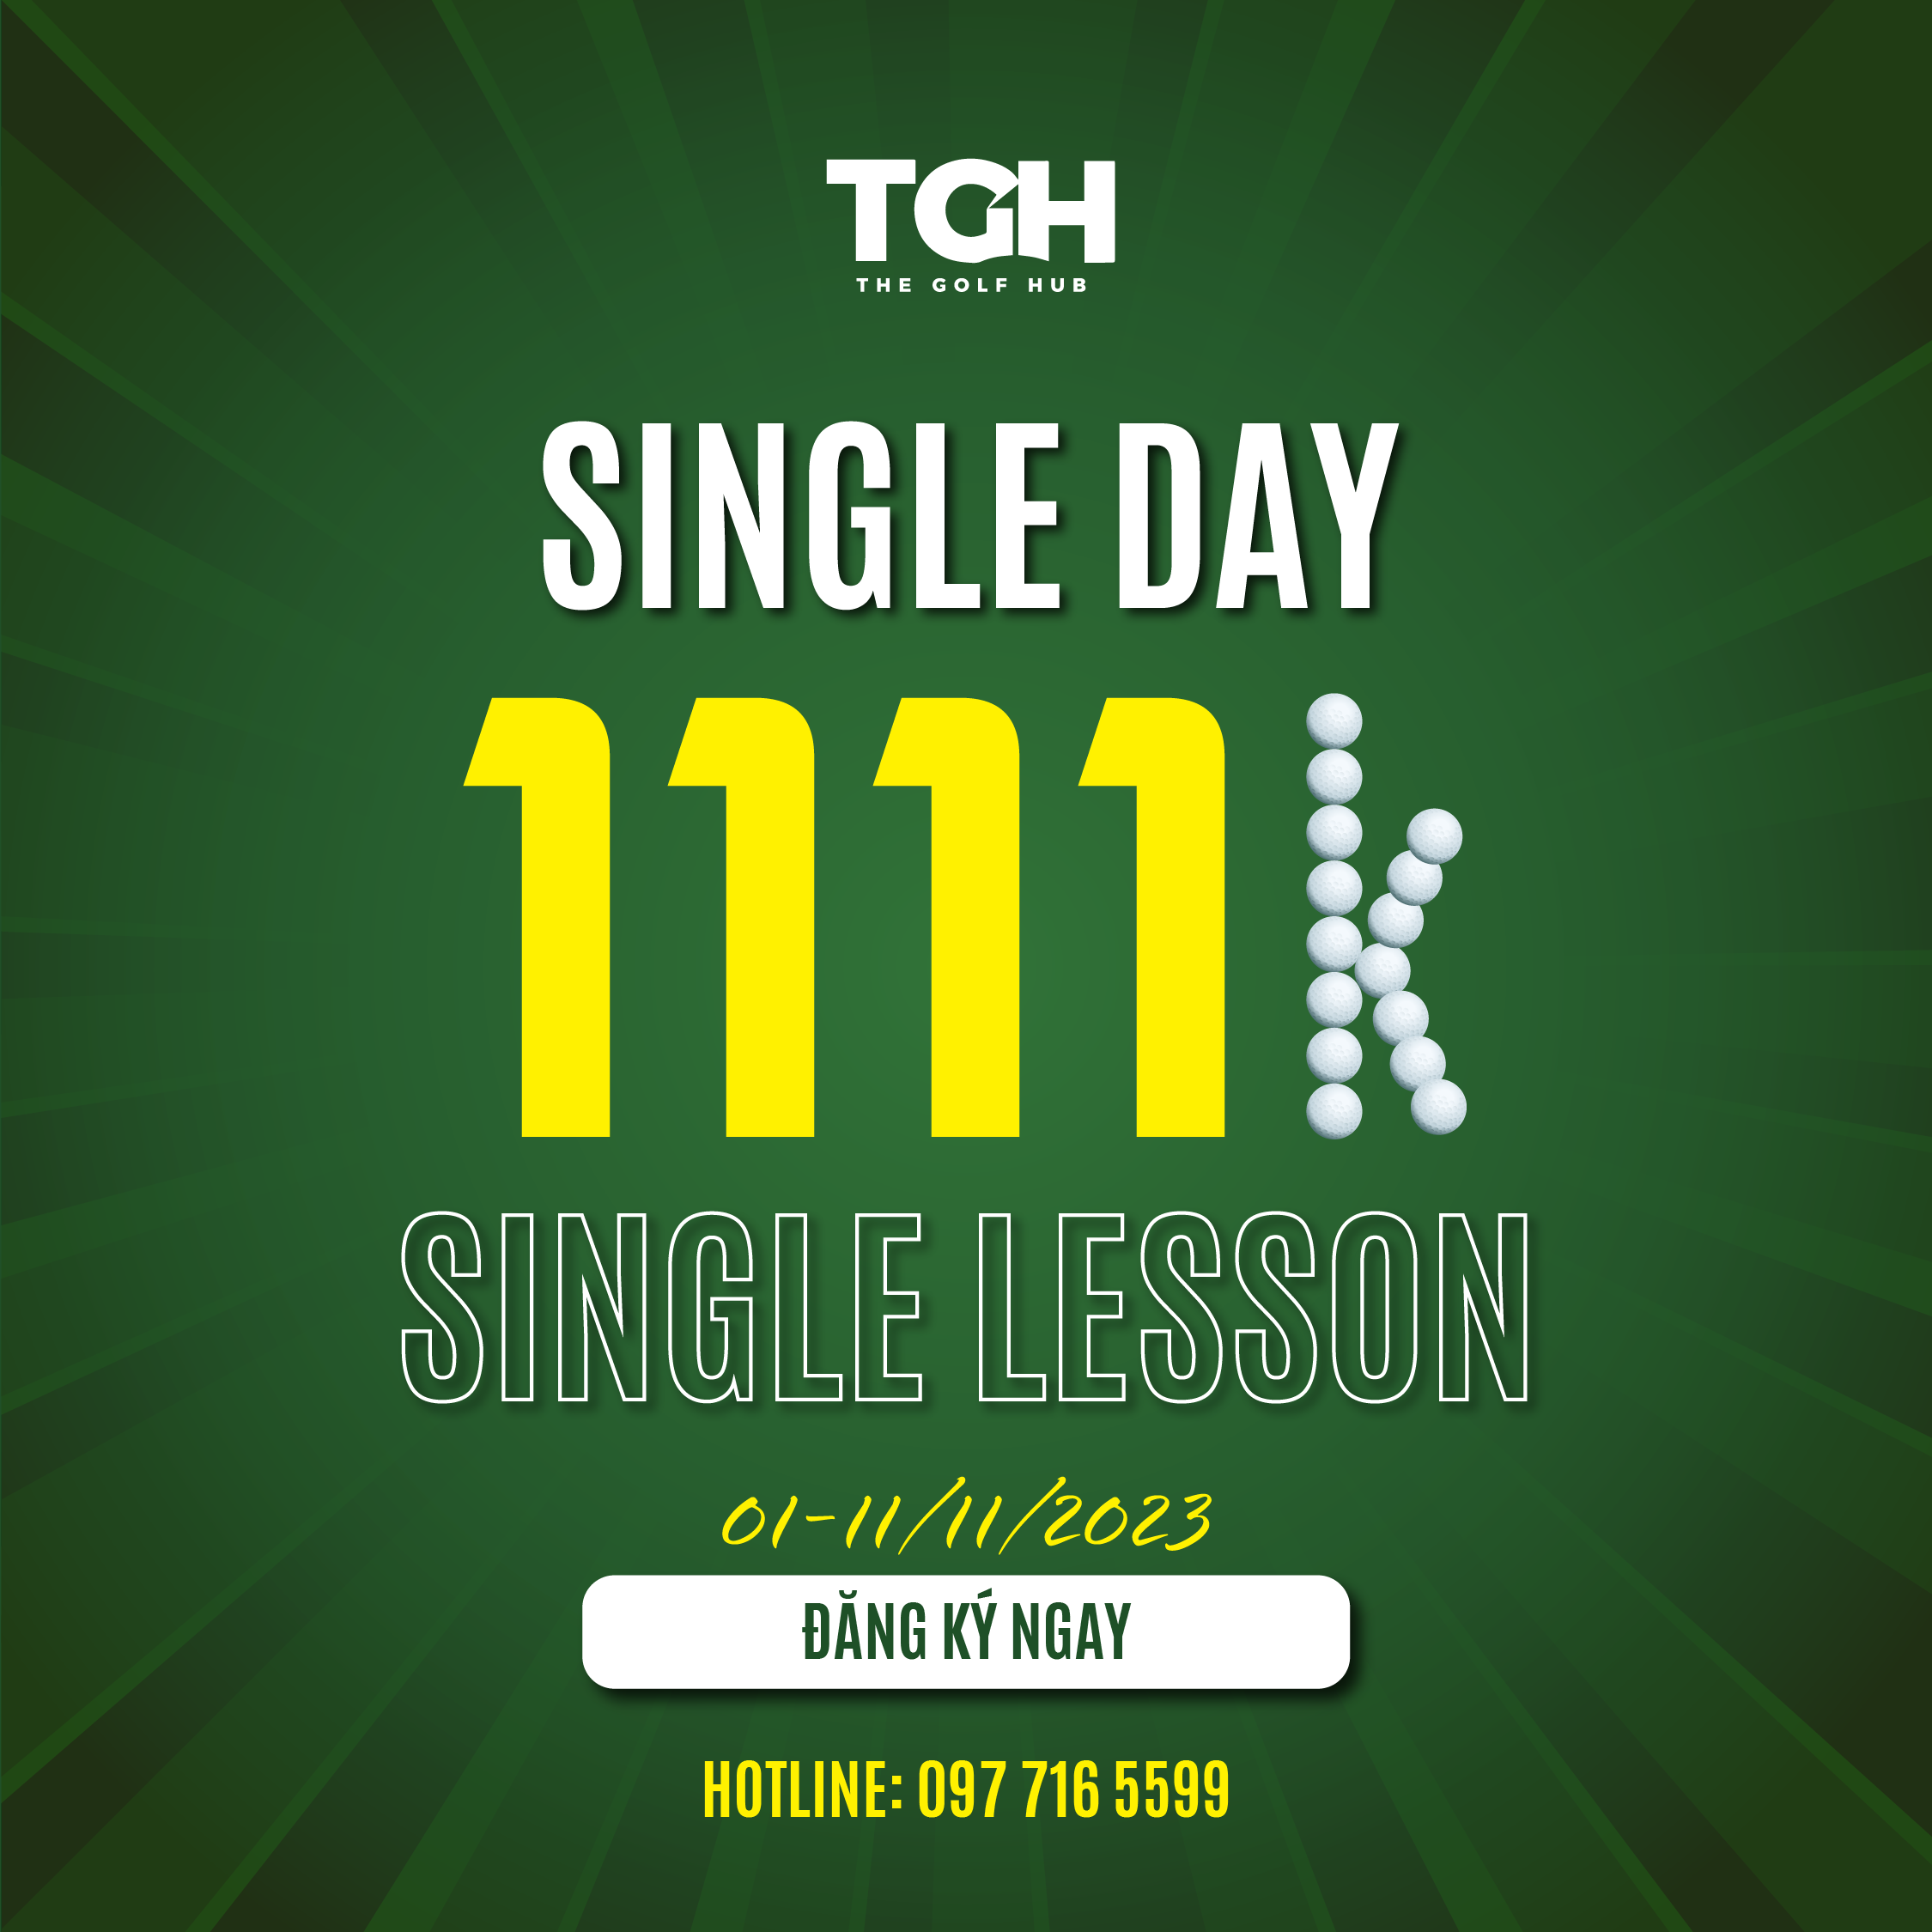 Single lesson 1111k